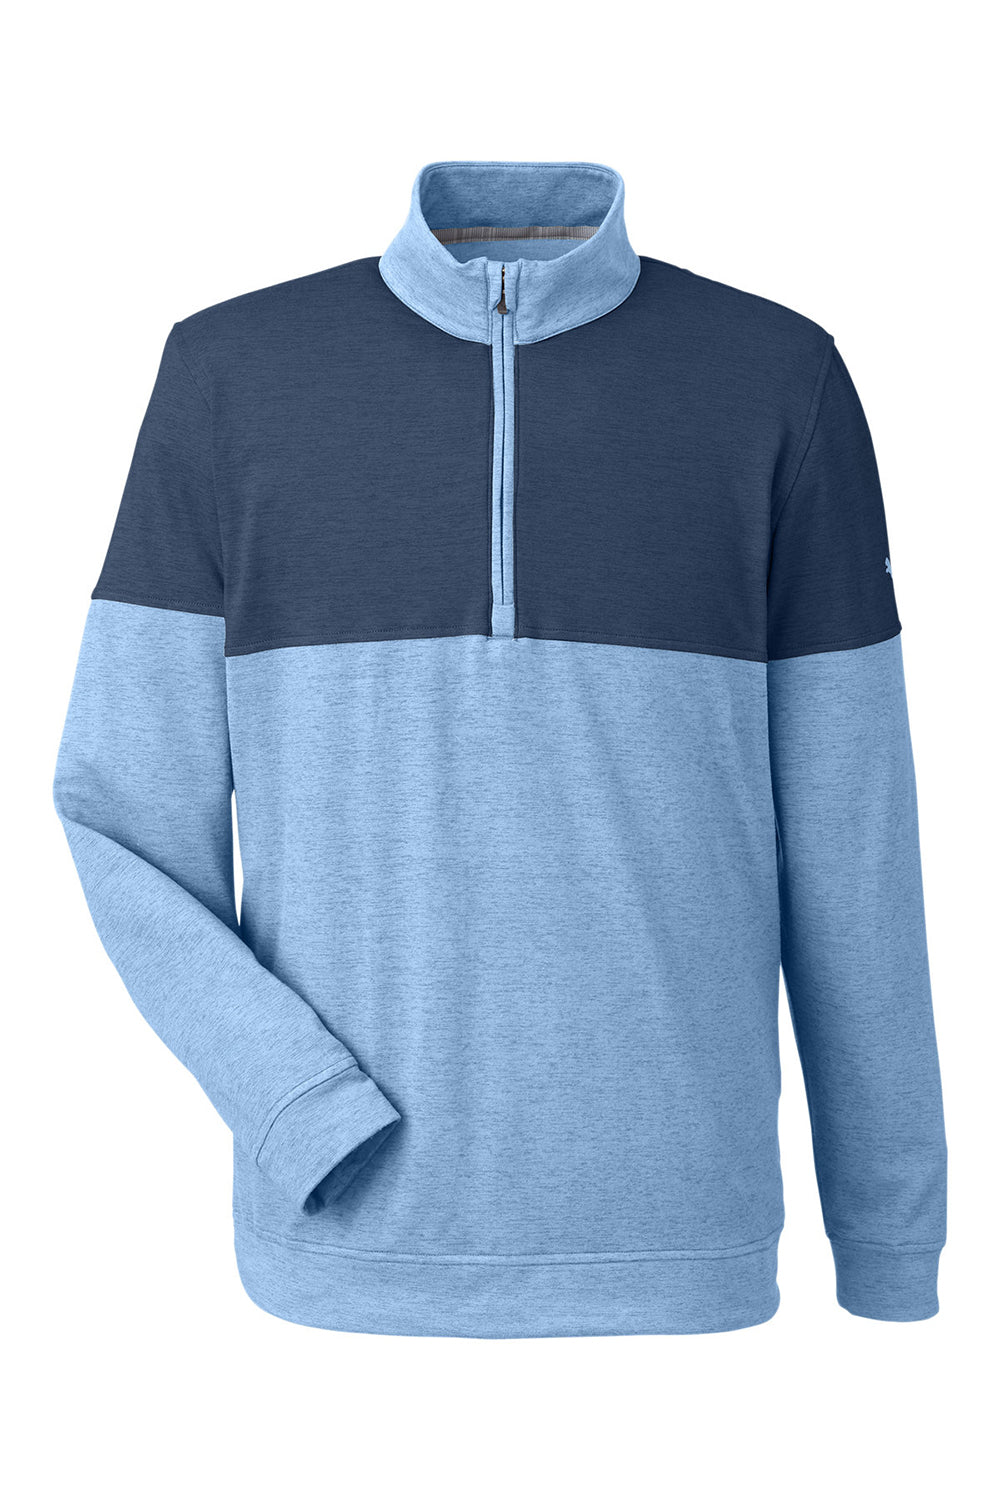 Puma 595803 Mens Cloudspun Warm Up 1/4 Zip Sweatshirt Bell Blue/Dark Denim Blue Flat Front